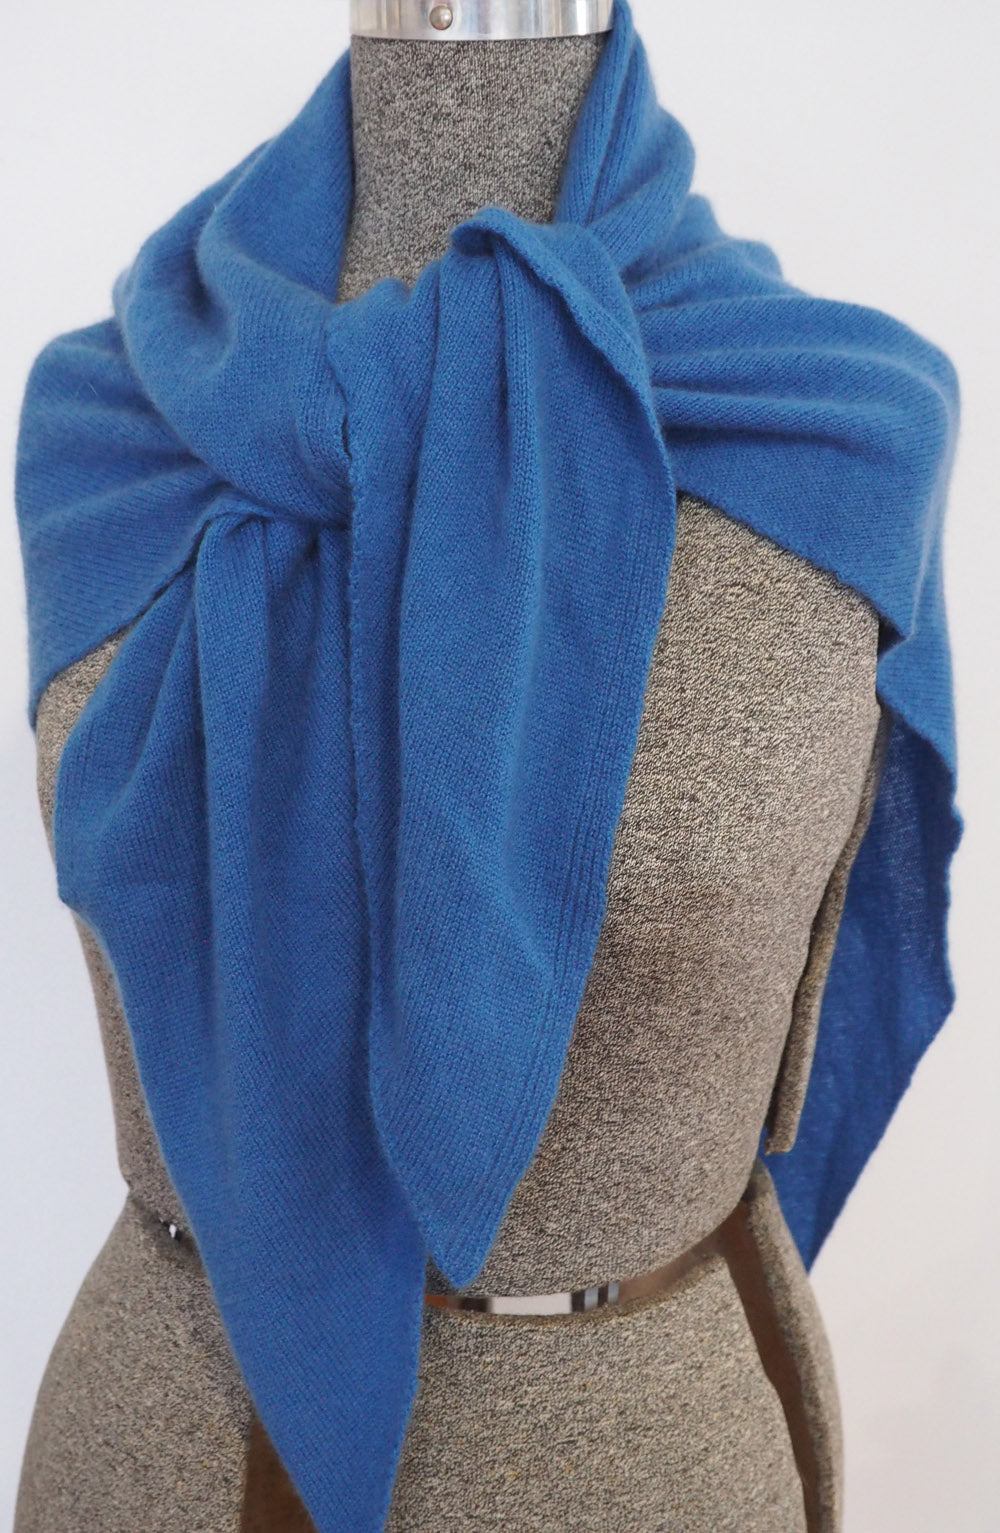 Fair trade 100% triangular cashmere shawl from Nepal.